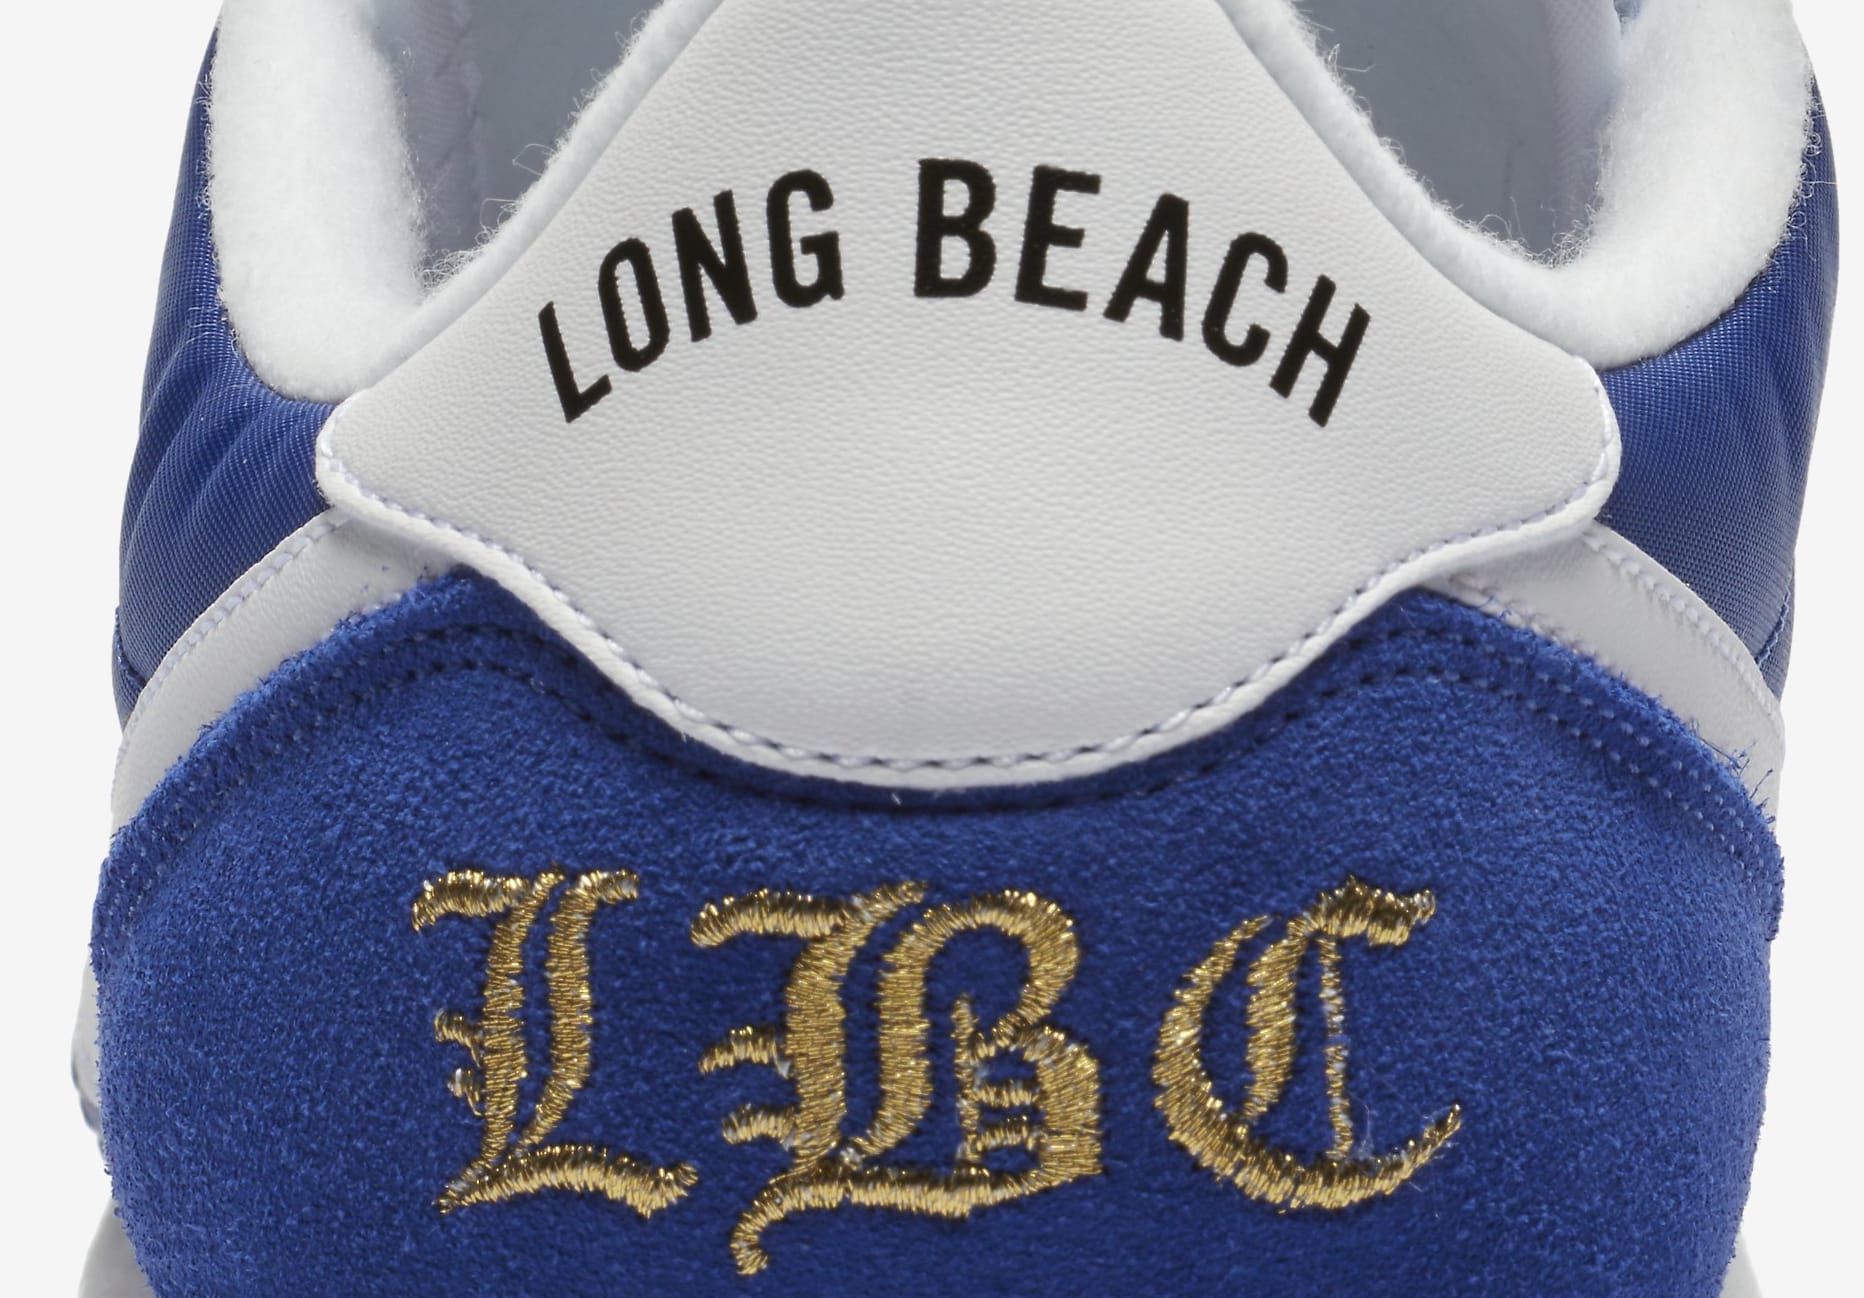 Nike Cortez Compton Long Beach | Sole 